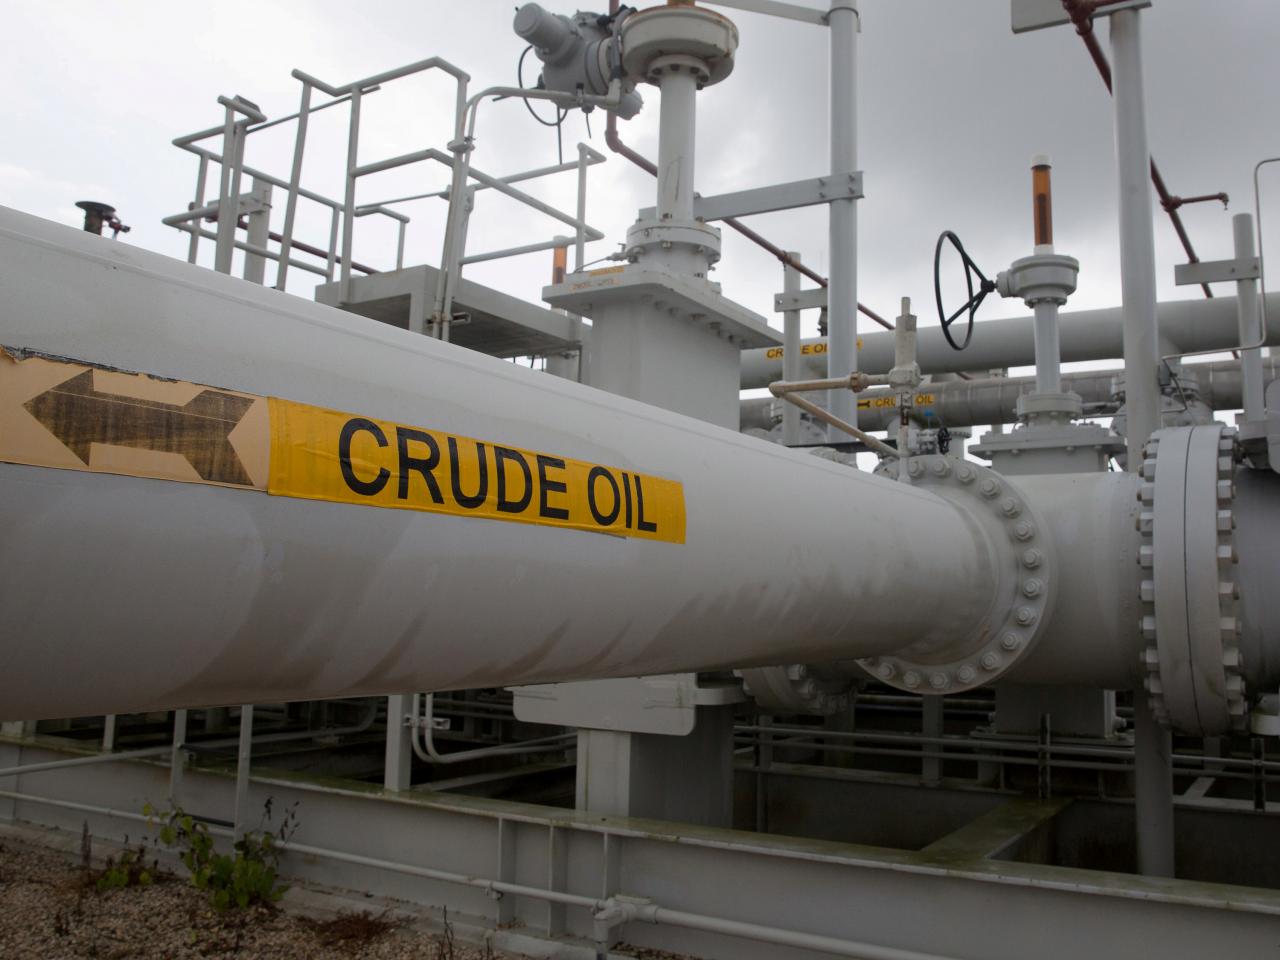 Oil rebounds after declines, but oversupply worries persist